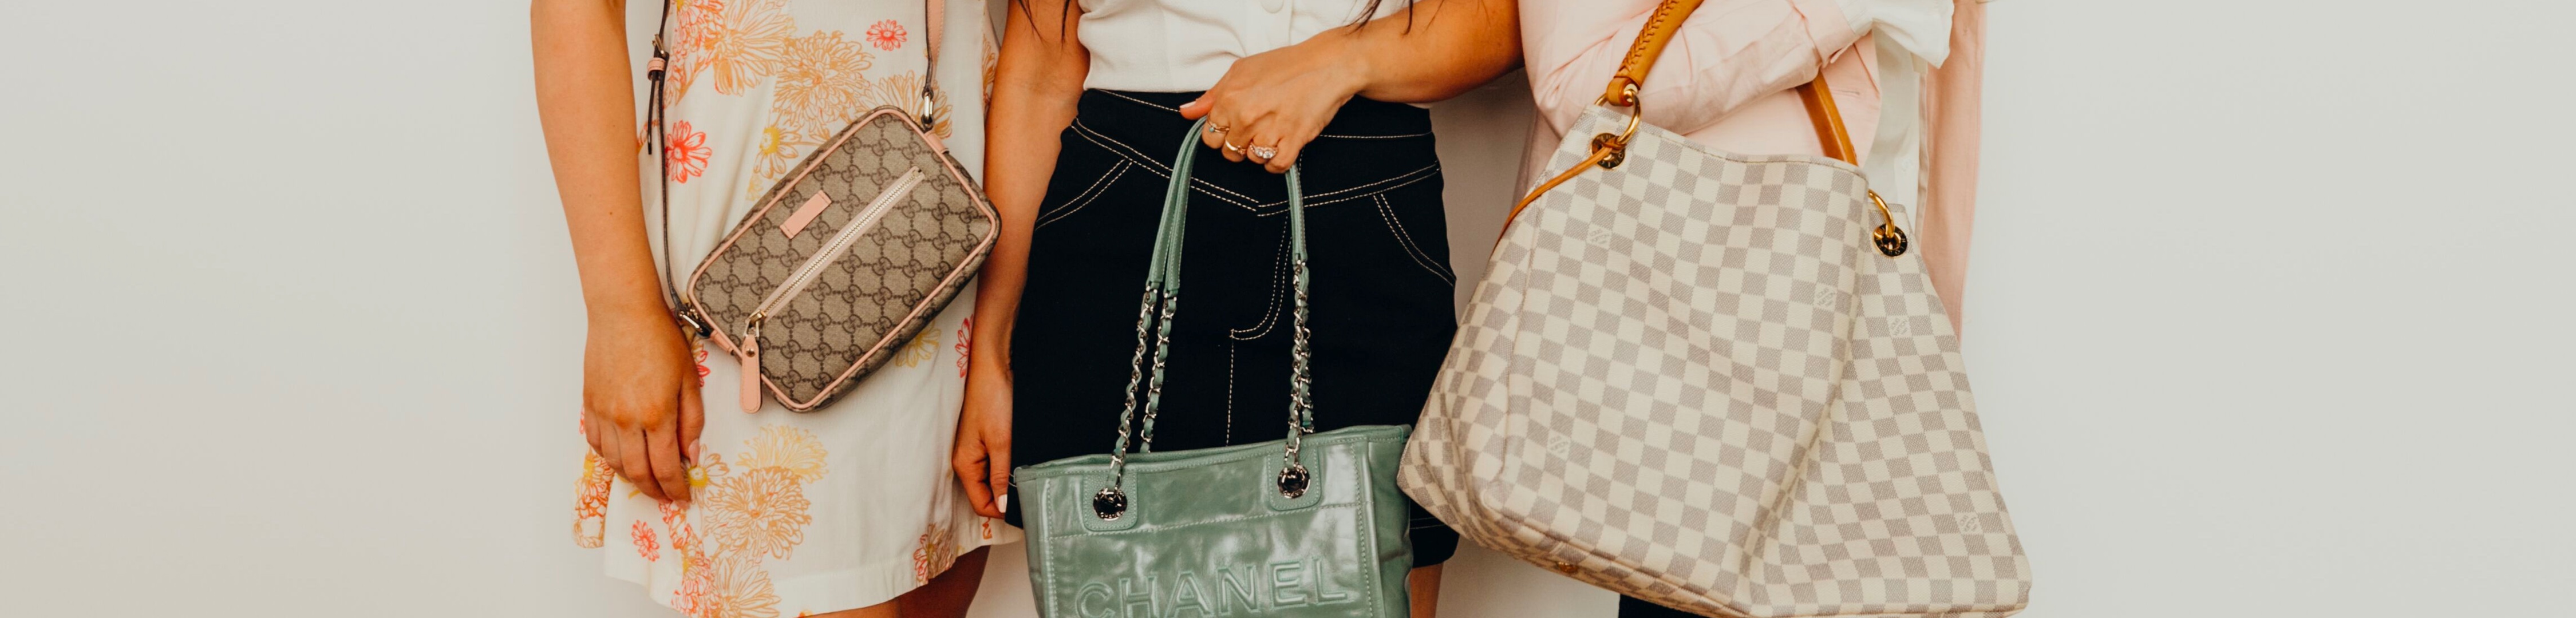 Affirm Financing – The Lady Bag